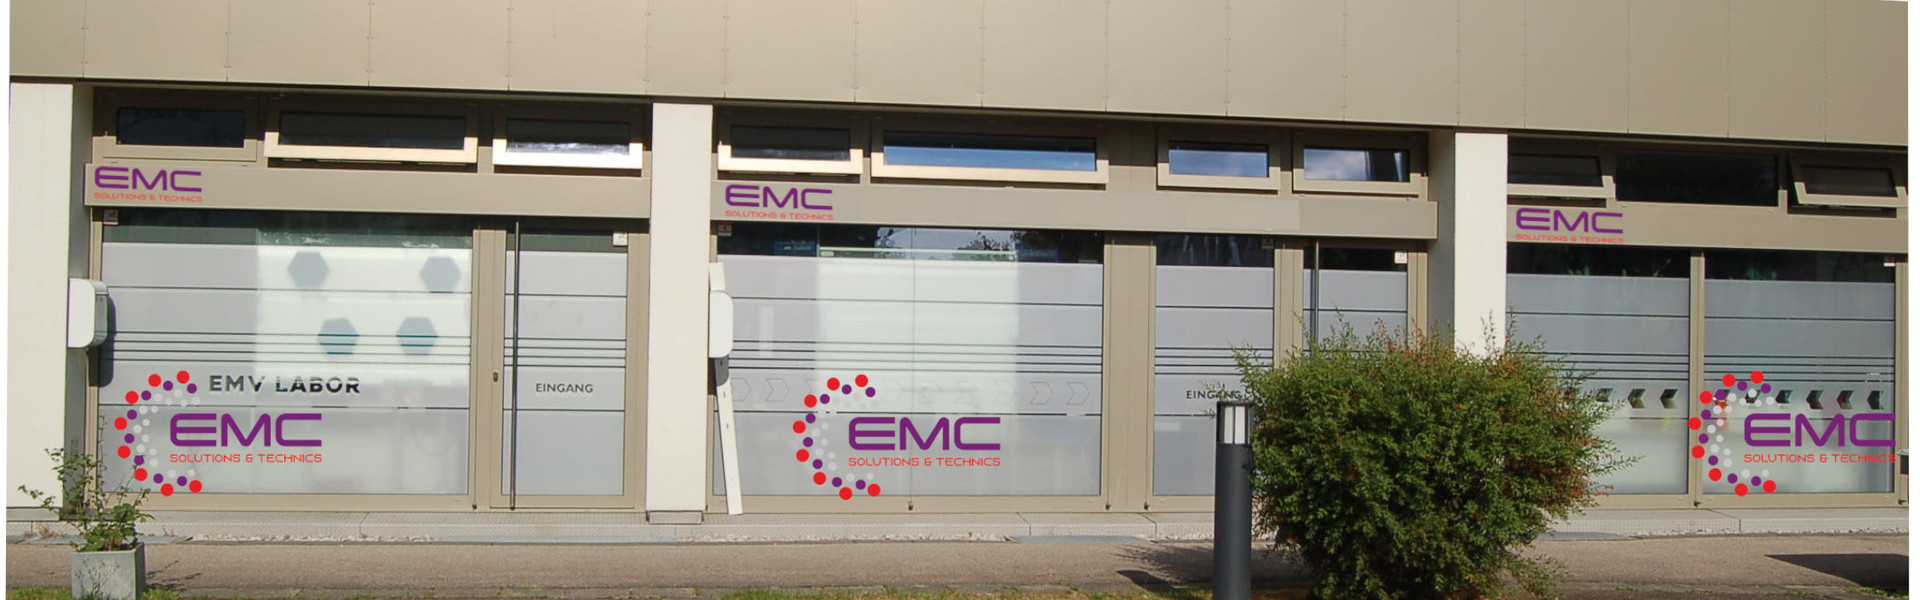 EMV Labor München